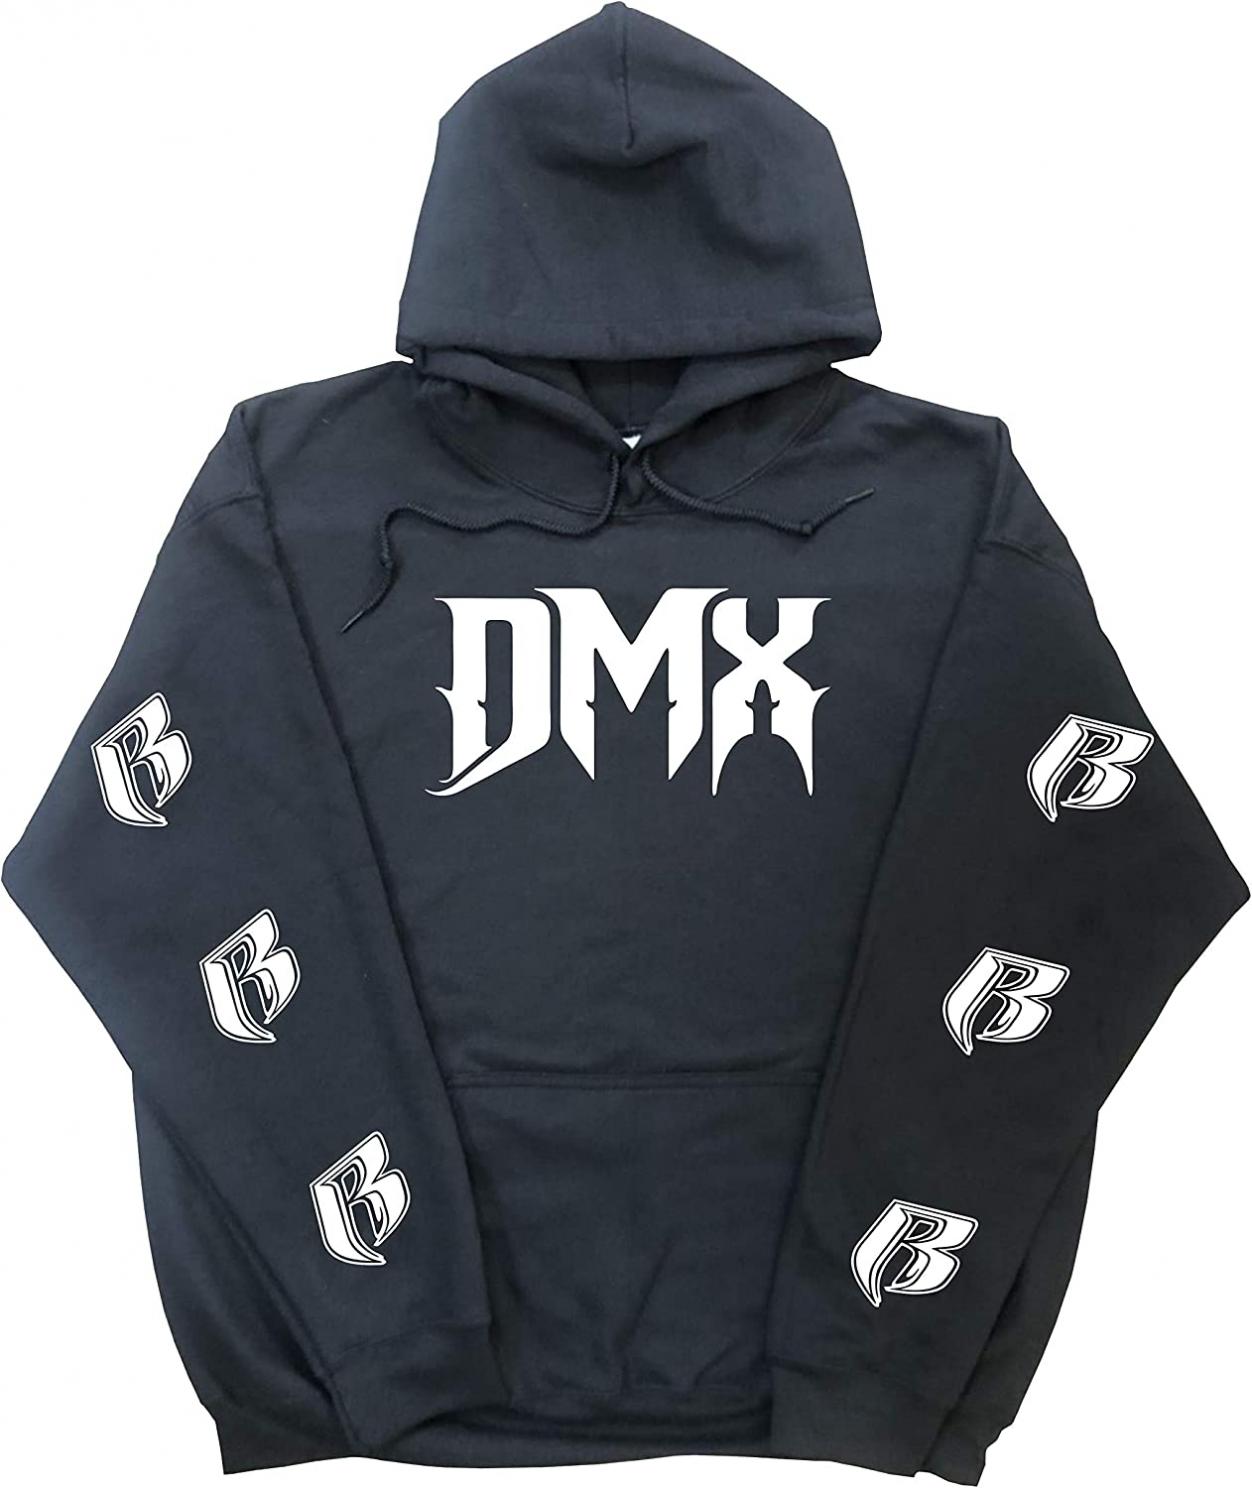 DMX Hoodie with Ruff Ryders Sleeves Black (White Design)